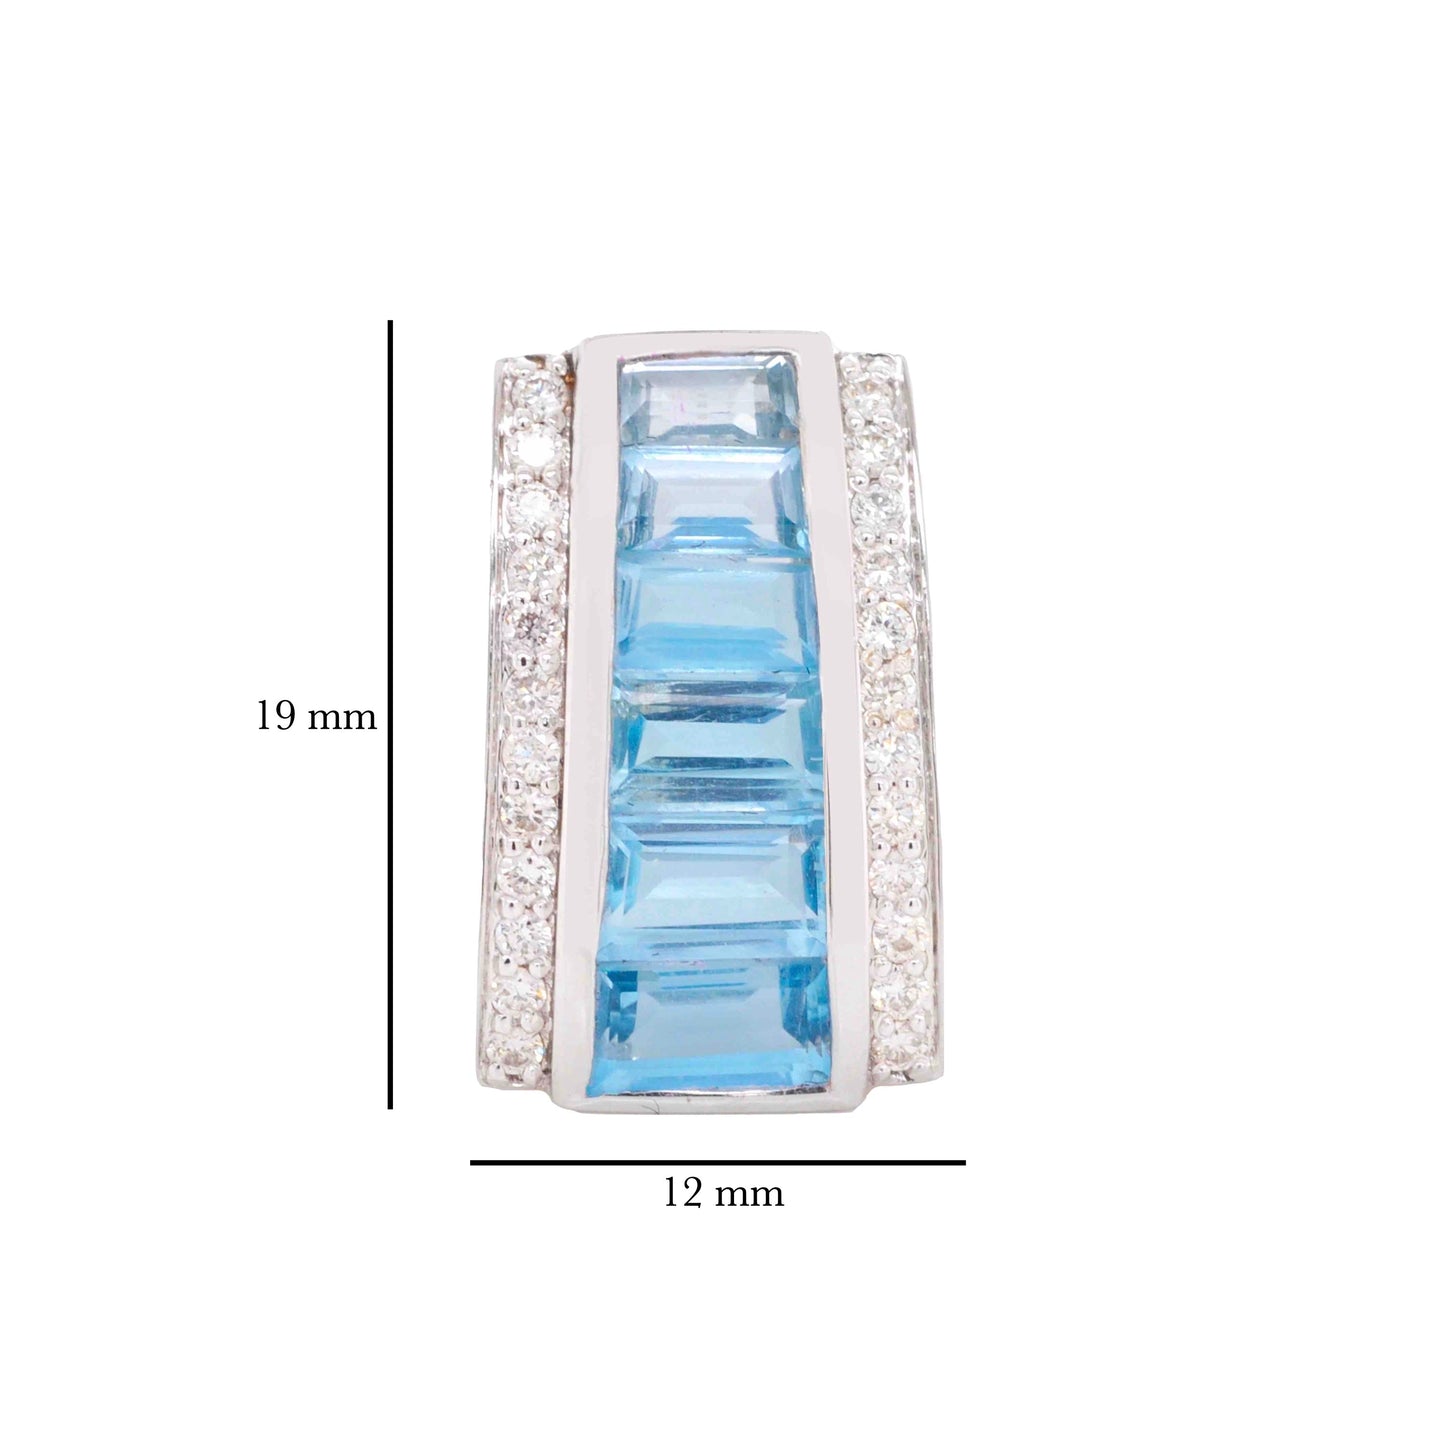 18K White Gold Blue Topaz Pyramid Diamond Pendant Necklace - Vaibhav Dhadda Jewelry